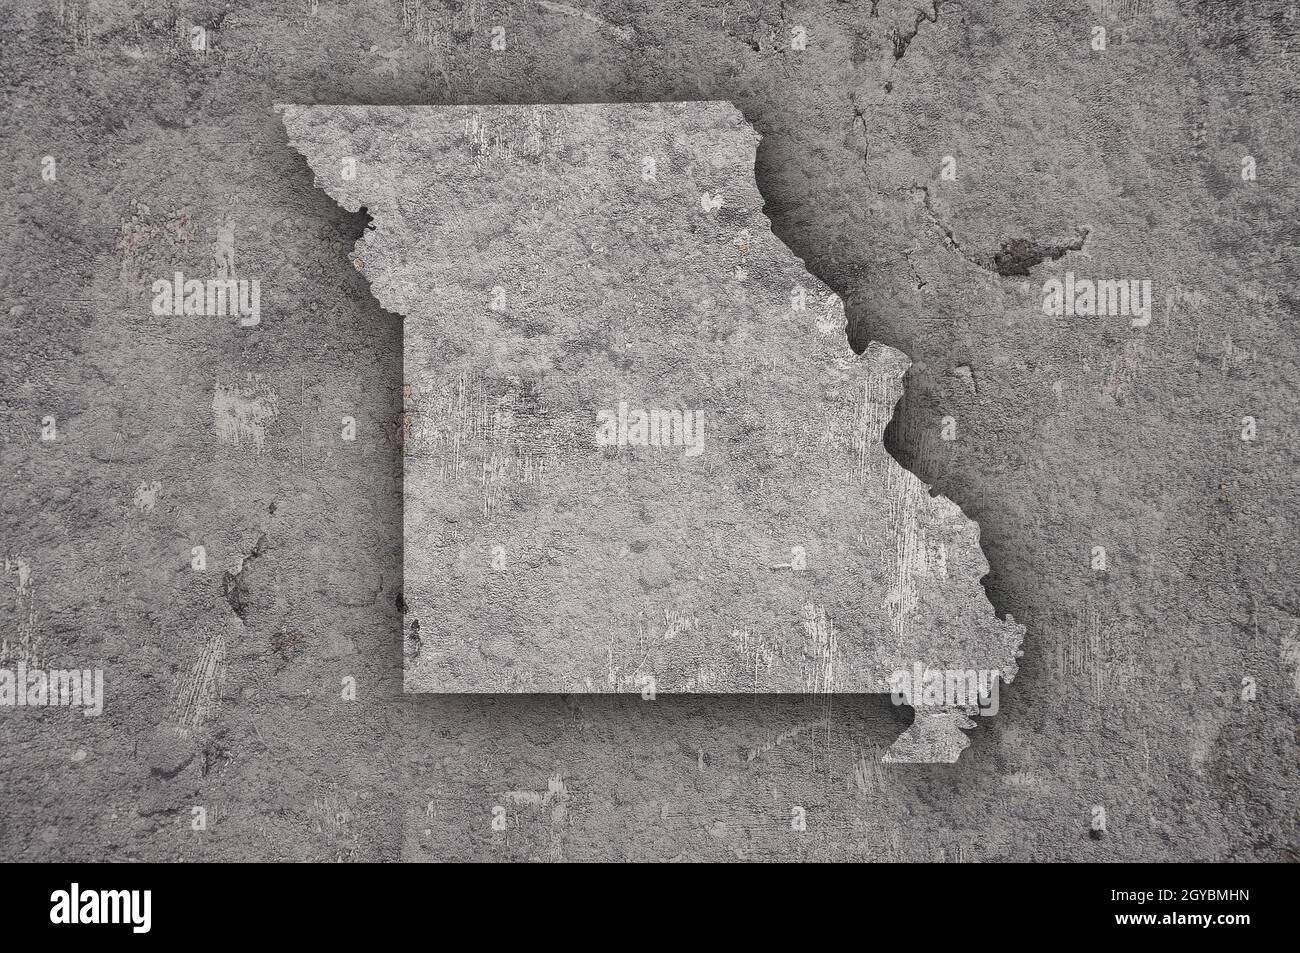 Map of Missouri on weathered concrete Stock Photo